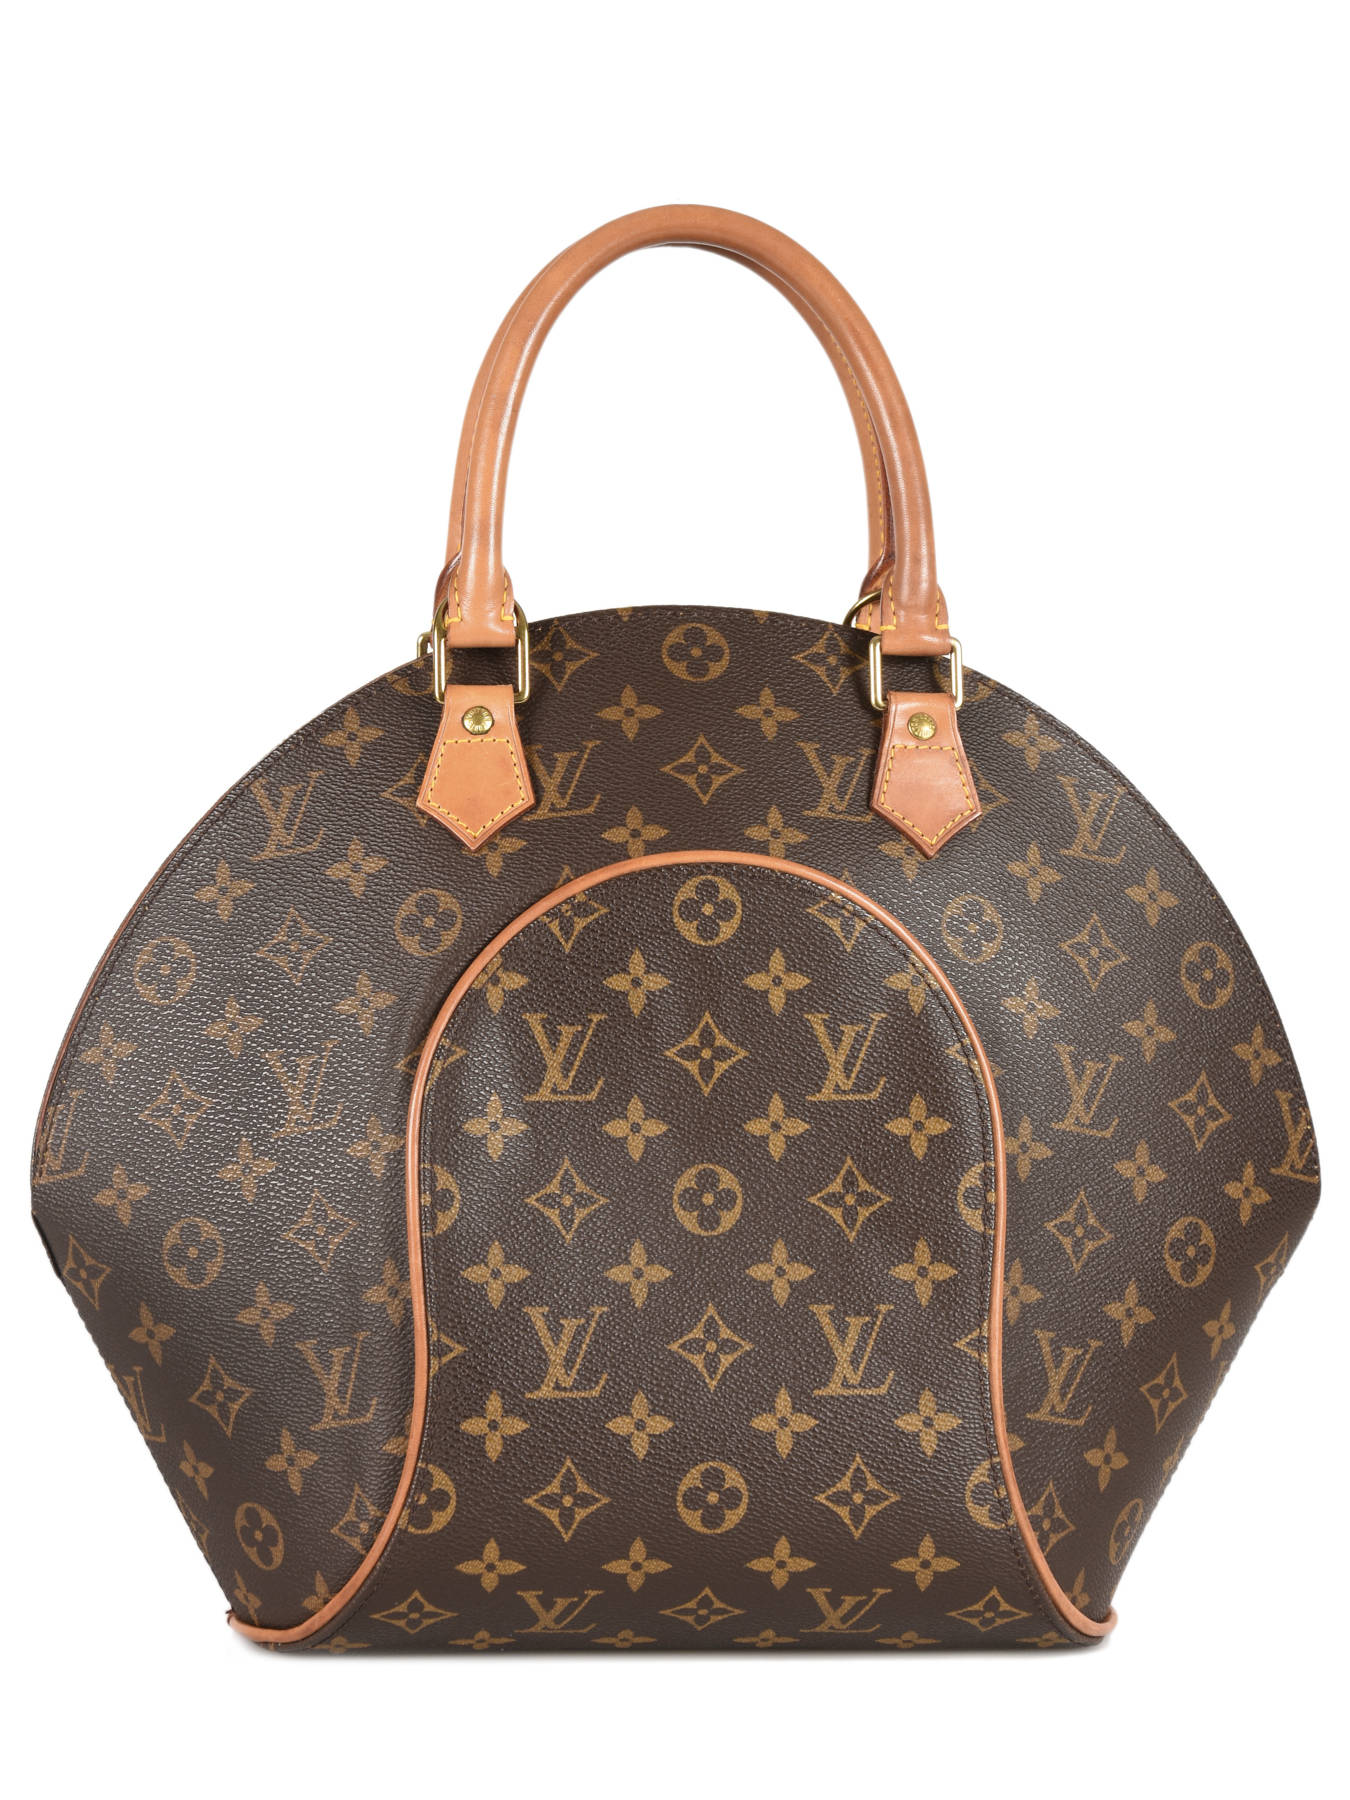 Louis Vuitton Handbag Monogram | Handbag Reviews 2018